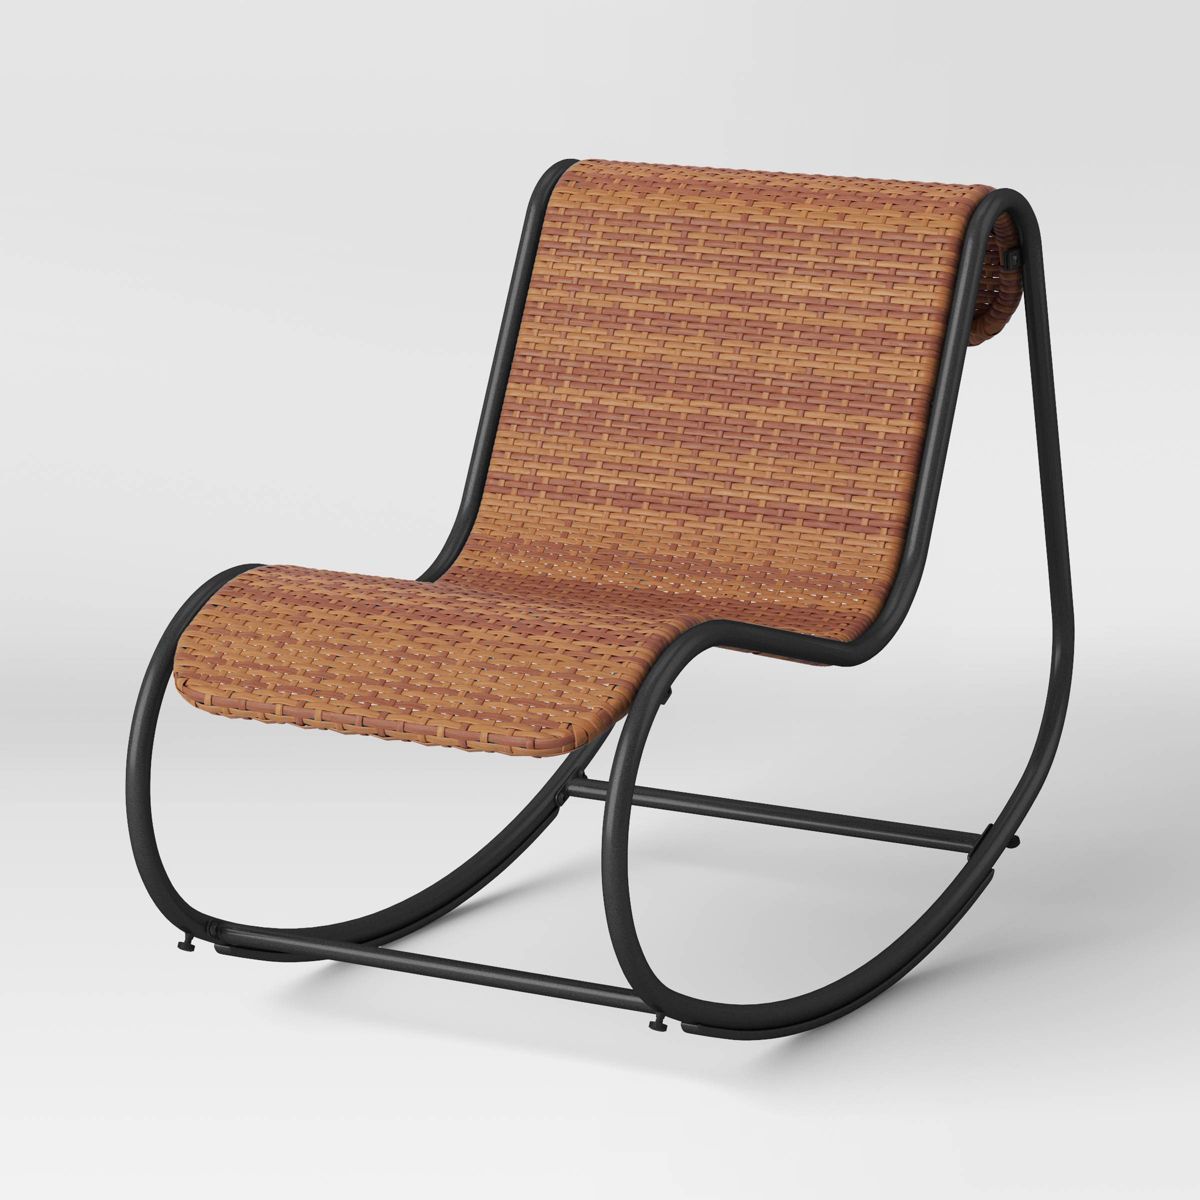 Wexler Wicker Outdoor Patio Chair, Rocking Chair, Accent Chair Black - Threshold™ | Target